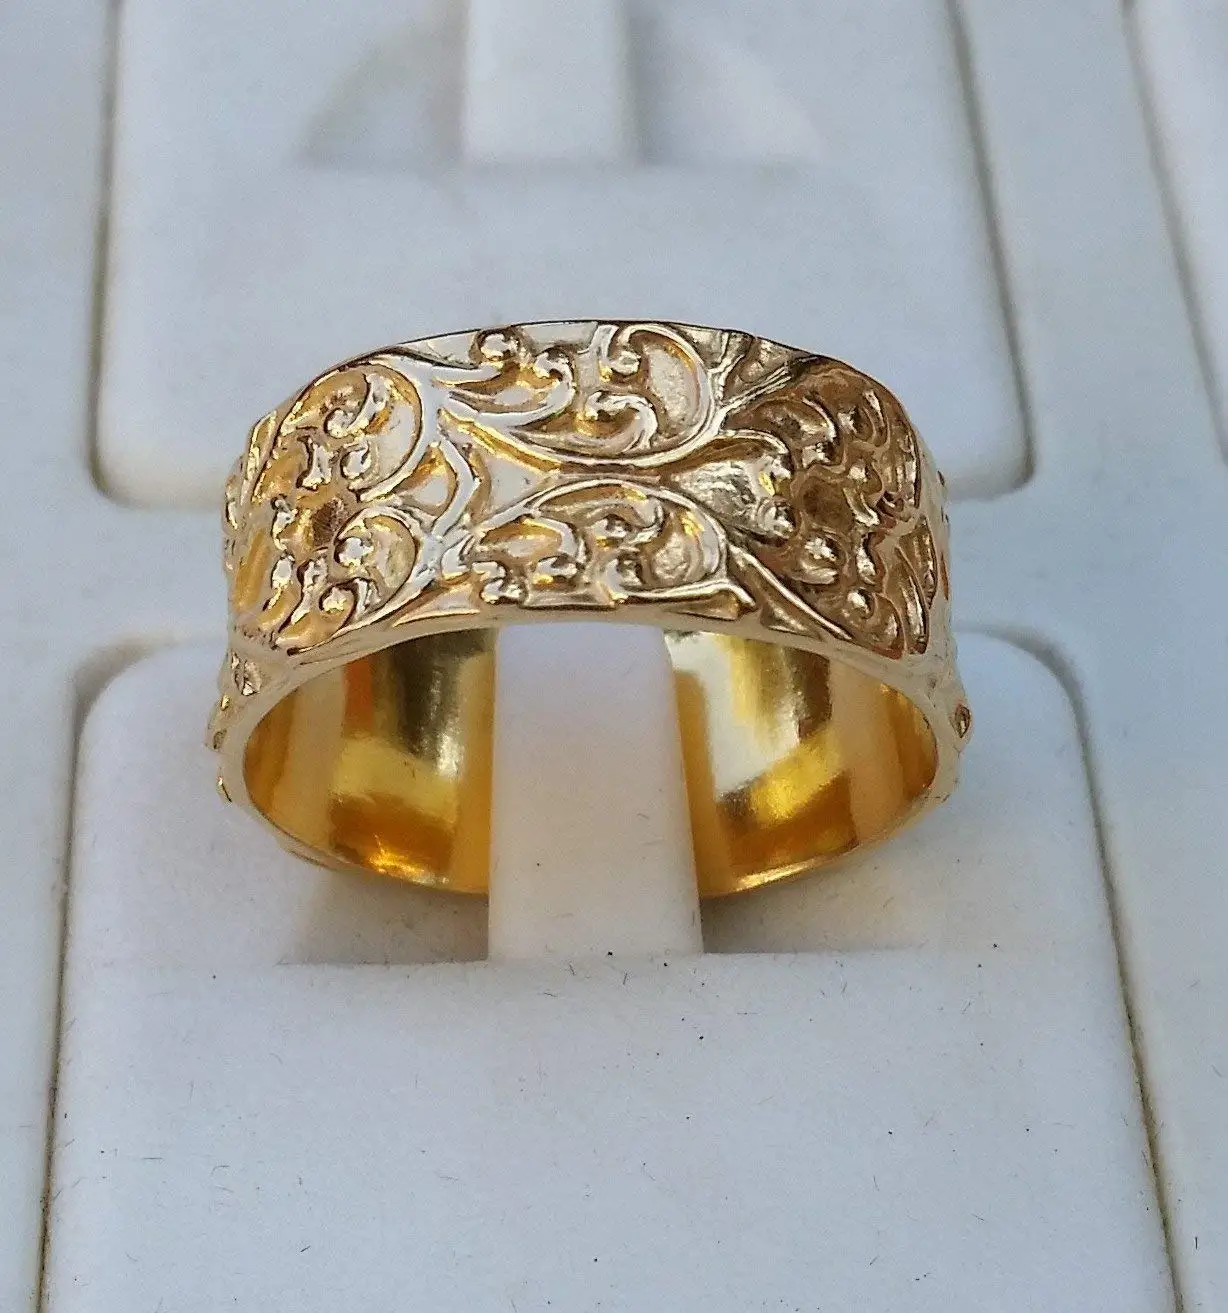 Cheap Wedding Ring Designs Gold Find Wedding Ring Designs Gold